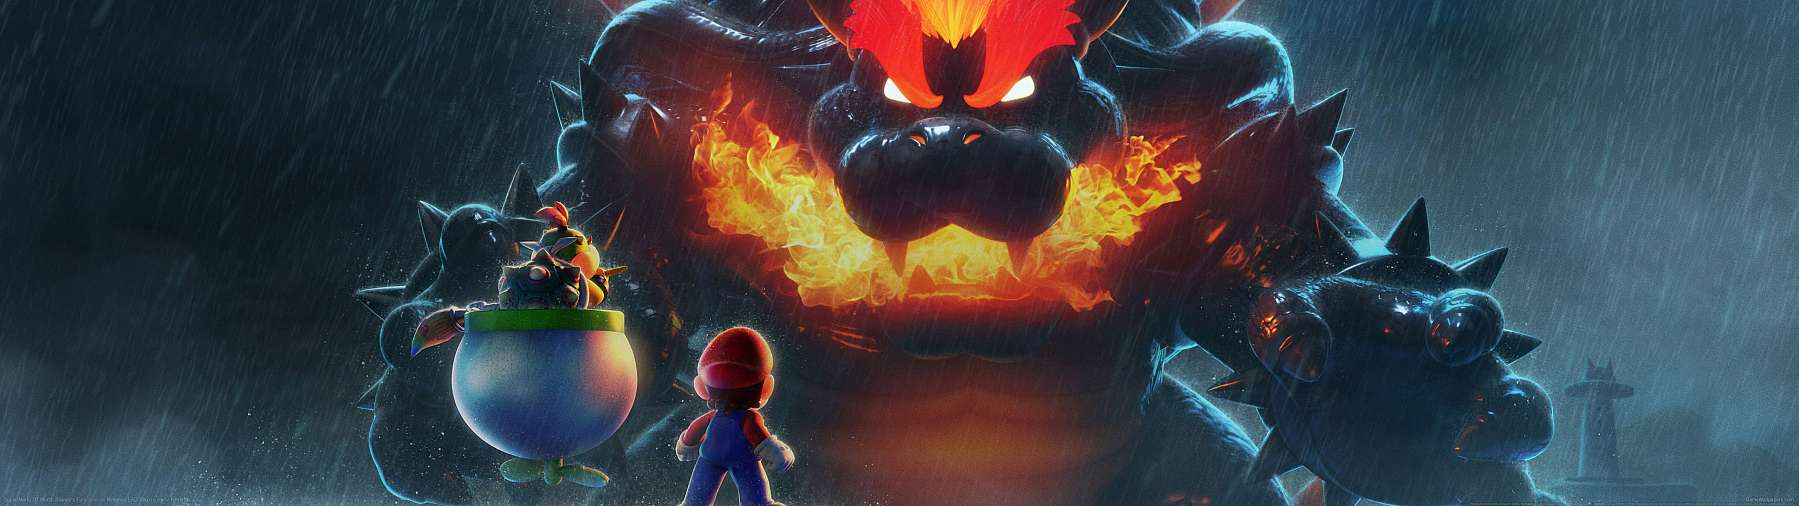 Super Mario 3D World: Bowser's Fury superwide achtergrond 01